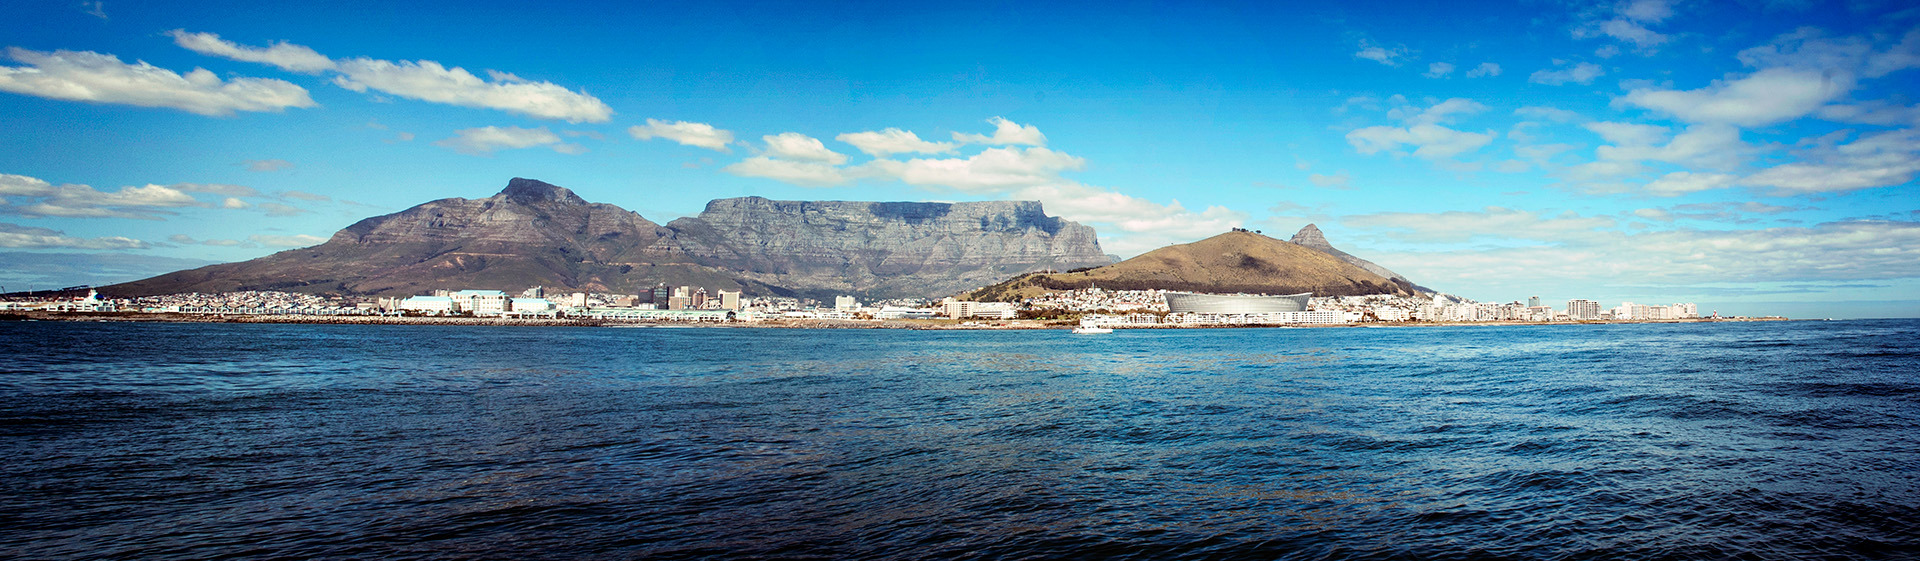 Team member Chayne banner image - coast of Table Bay